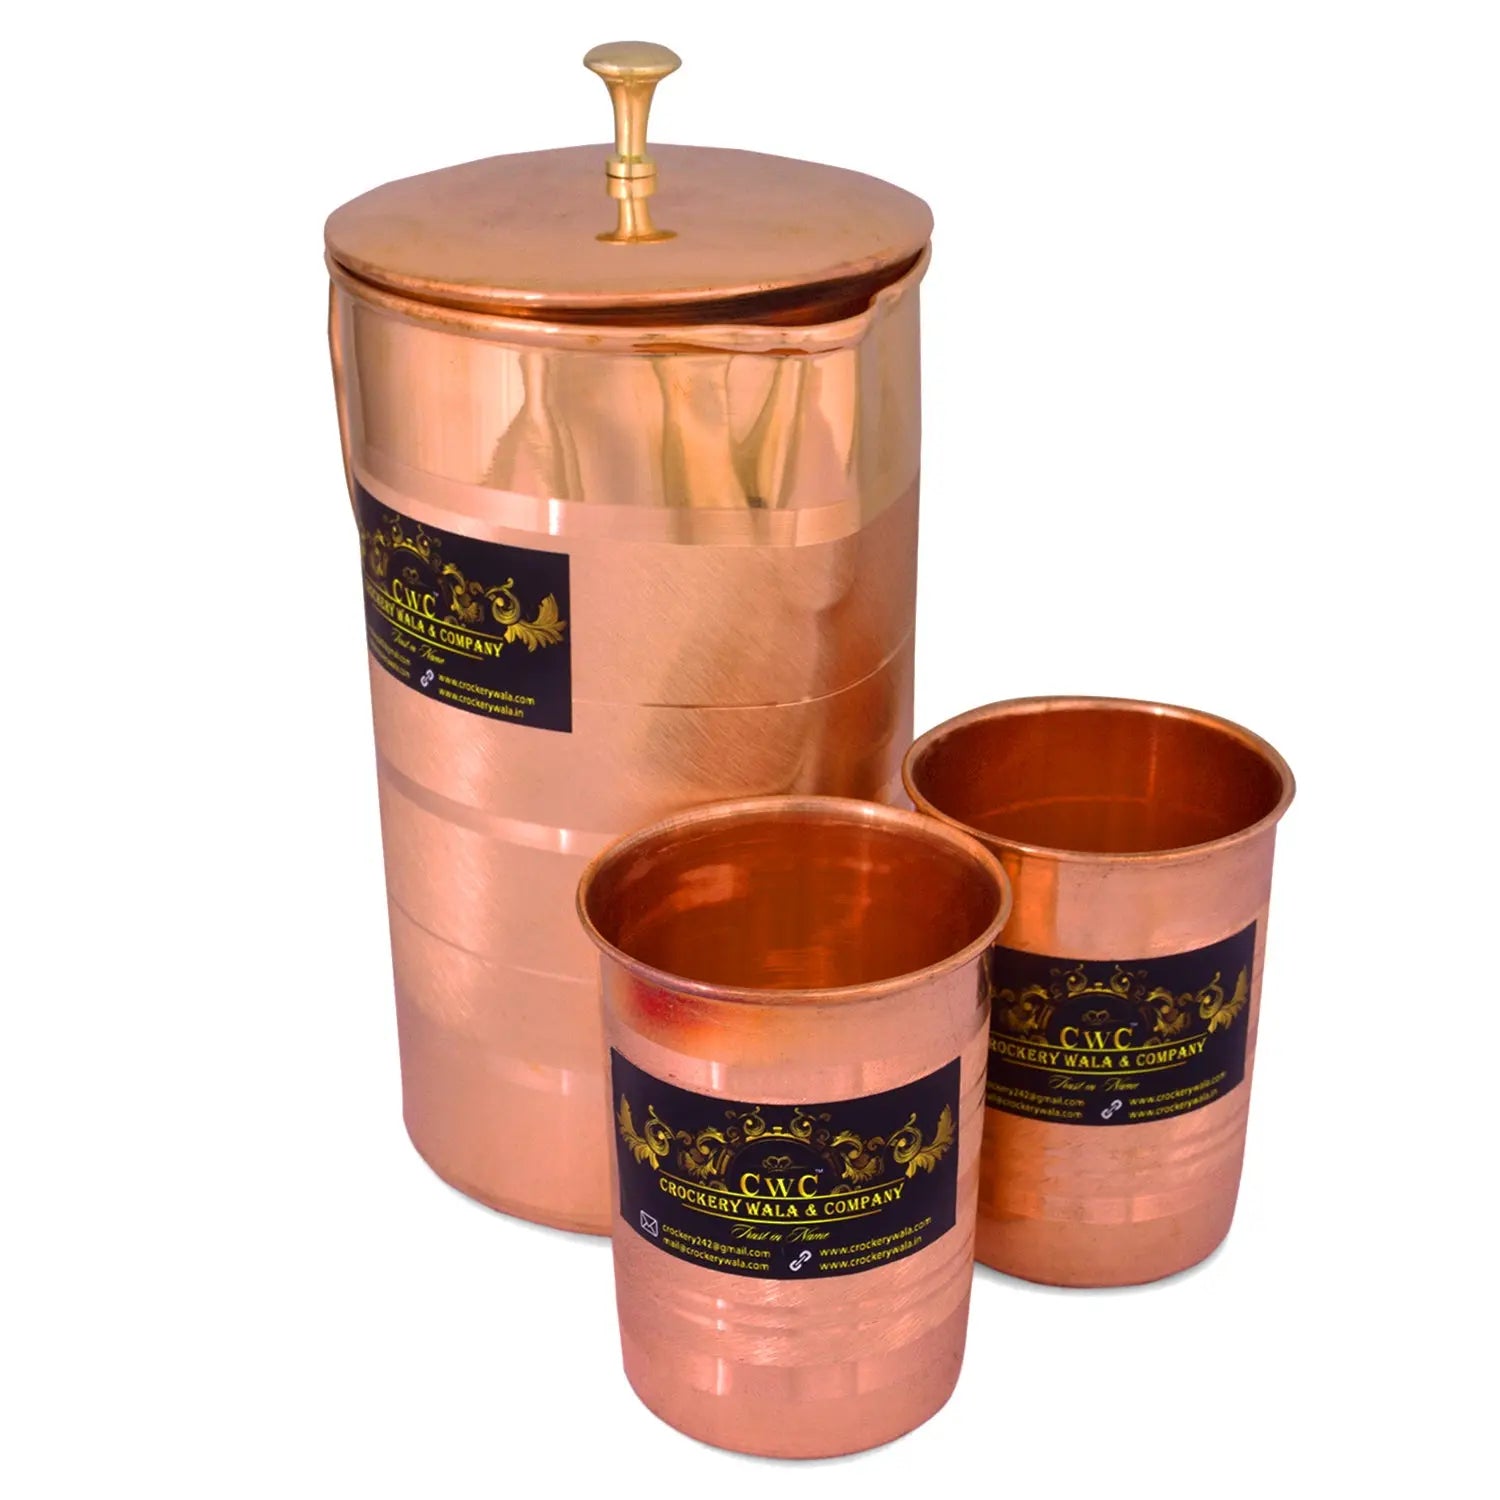 CROCKERY WALA AND COMPANY Copper Handmade Jug with Glass Cup Luxury -Set of 3 - Crockery Wala And Company